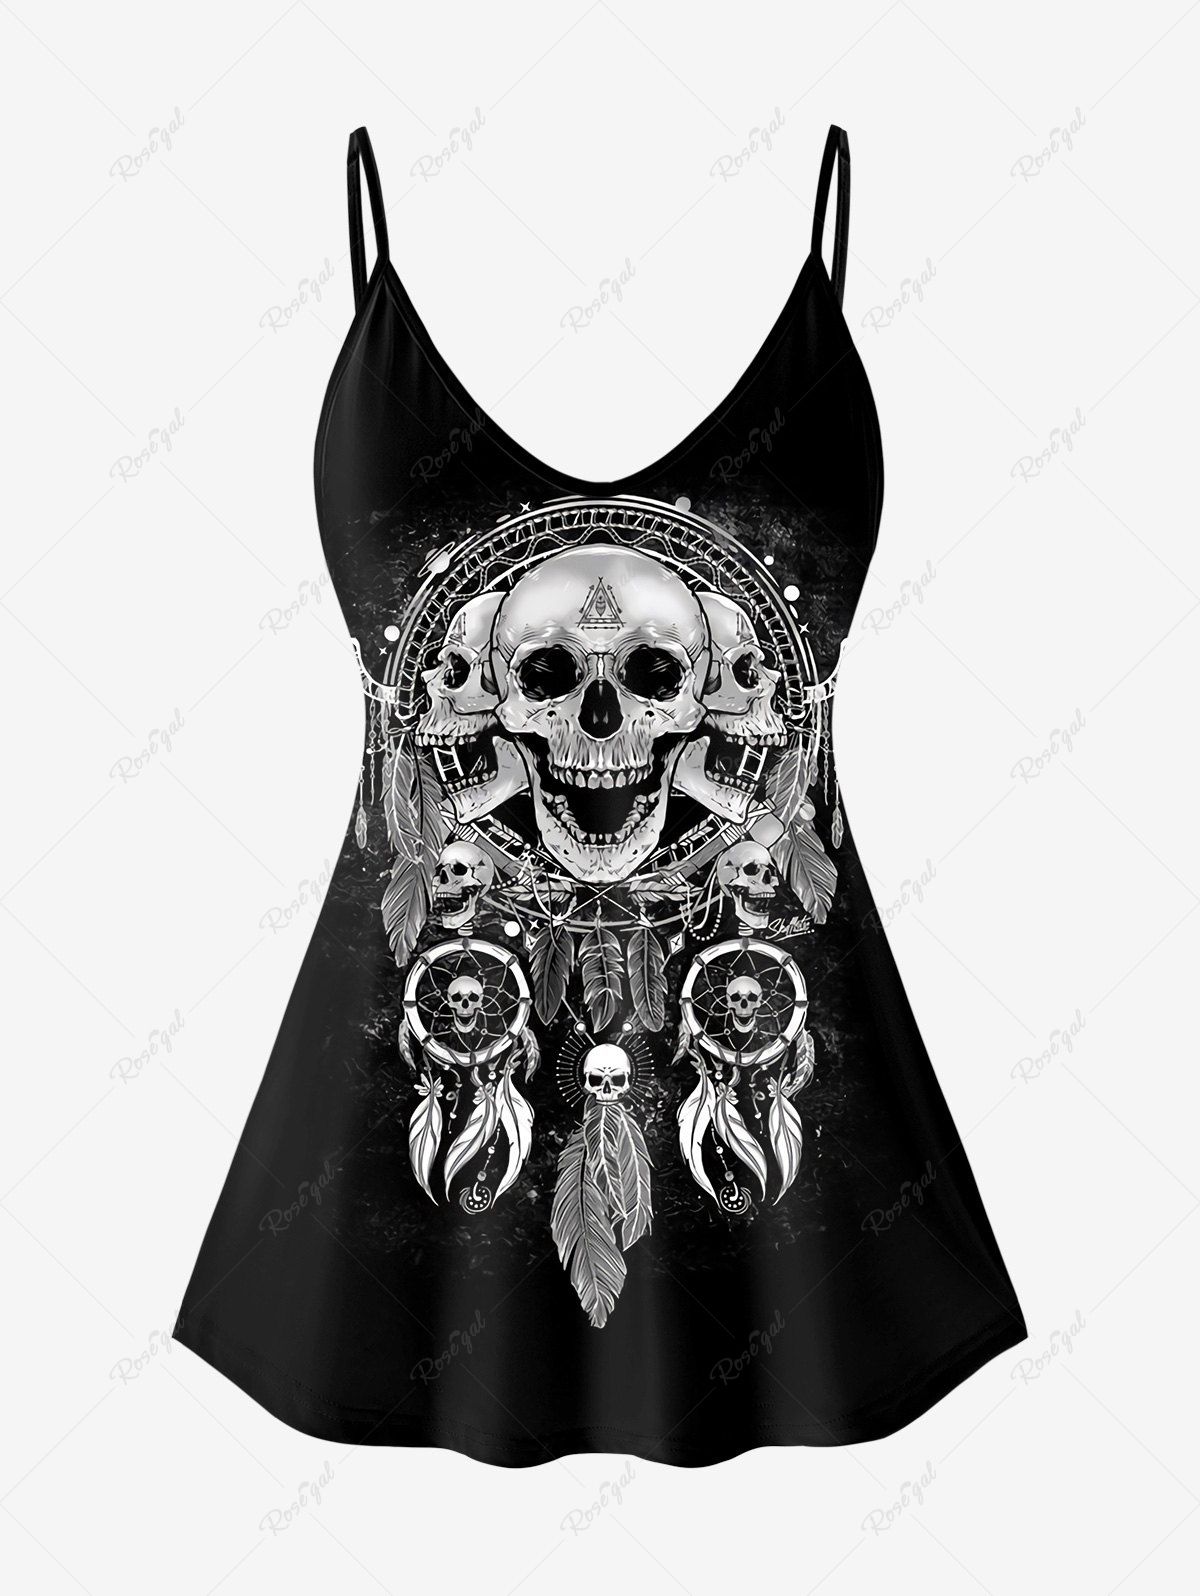 Sale Gothic Skull Dreamcatcher Print Cami Top (Adjustable Straps)  